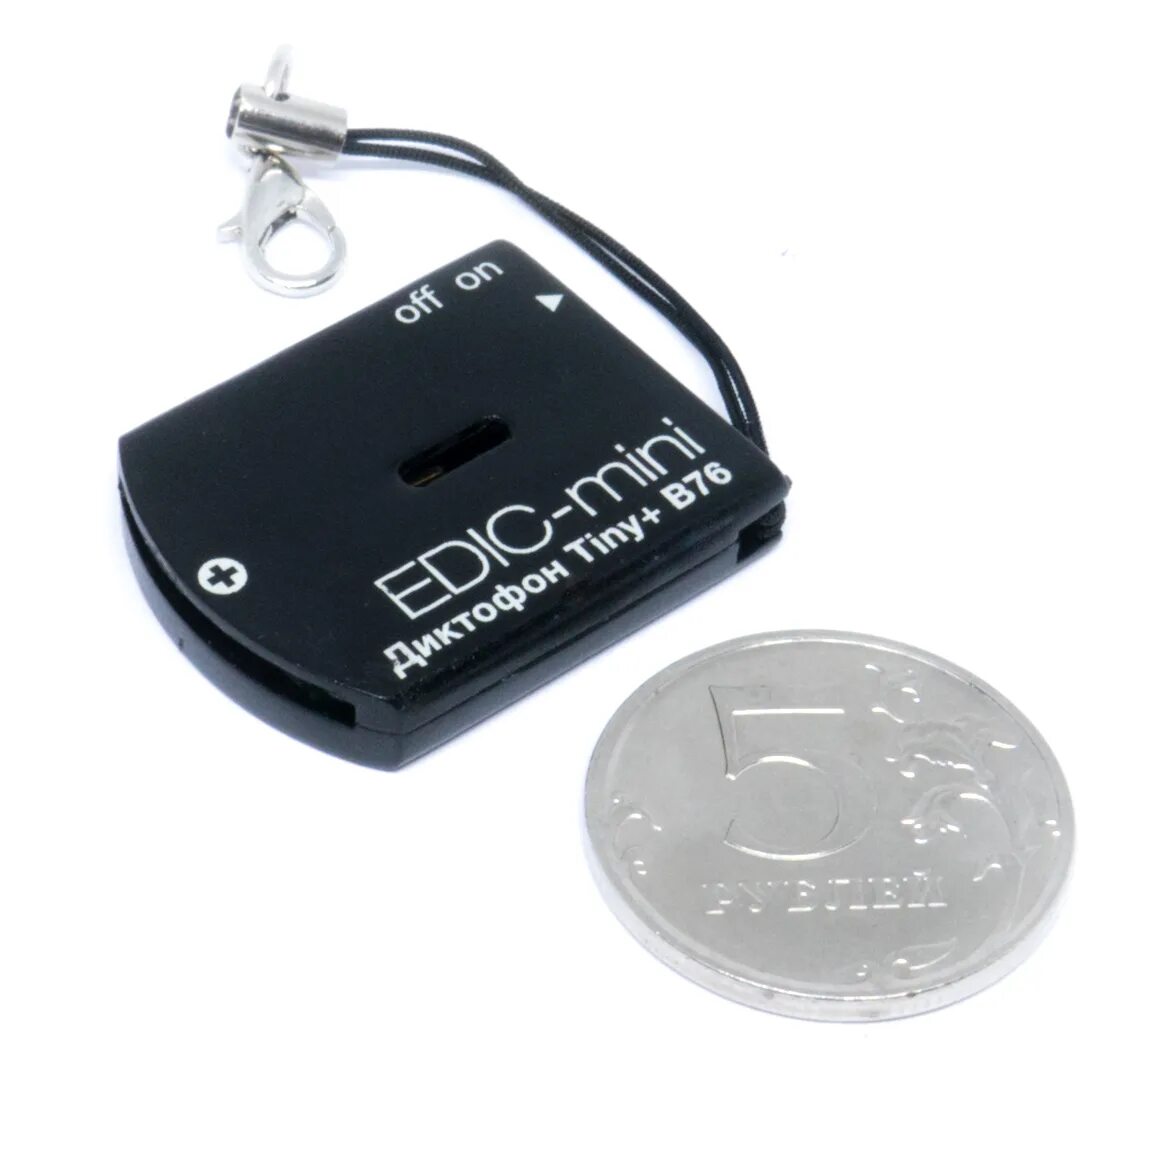 Лучшие диктофоны для записи разговоров. Edic-Mini tiny + b76-150hq. Edic Mini tiny b76. Диктофон Edic-Mini tiny b76. Edic-Mini tiny+ в76 (150hq).